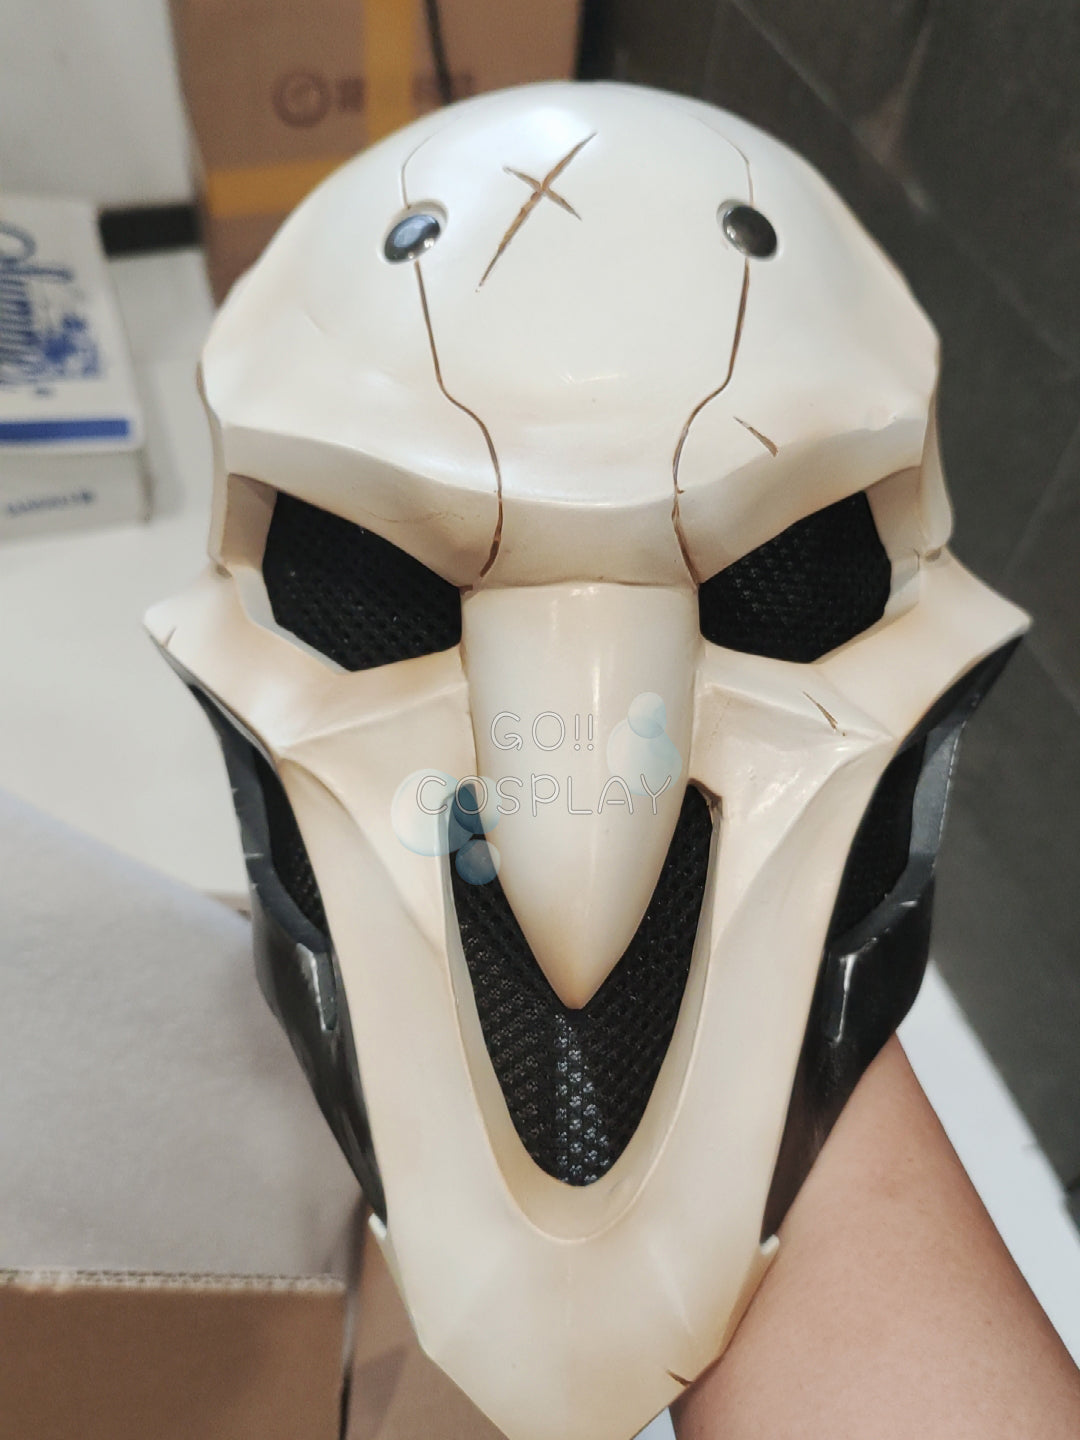 Overwatch Reaper Mask